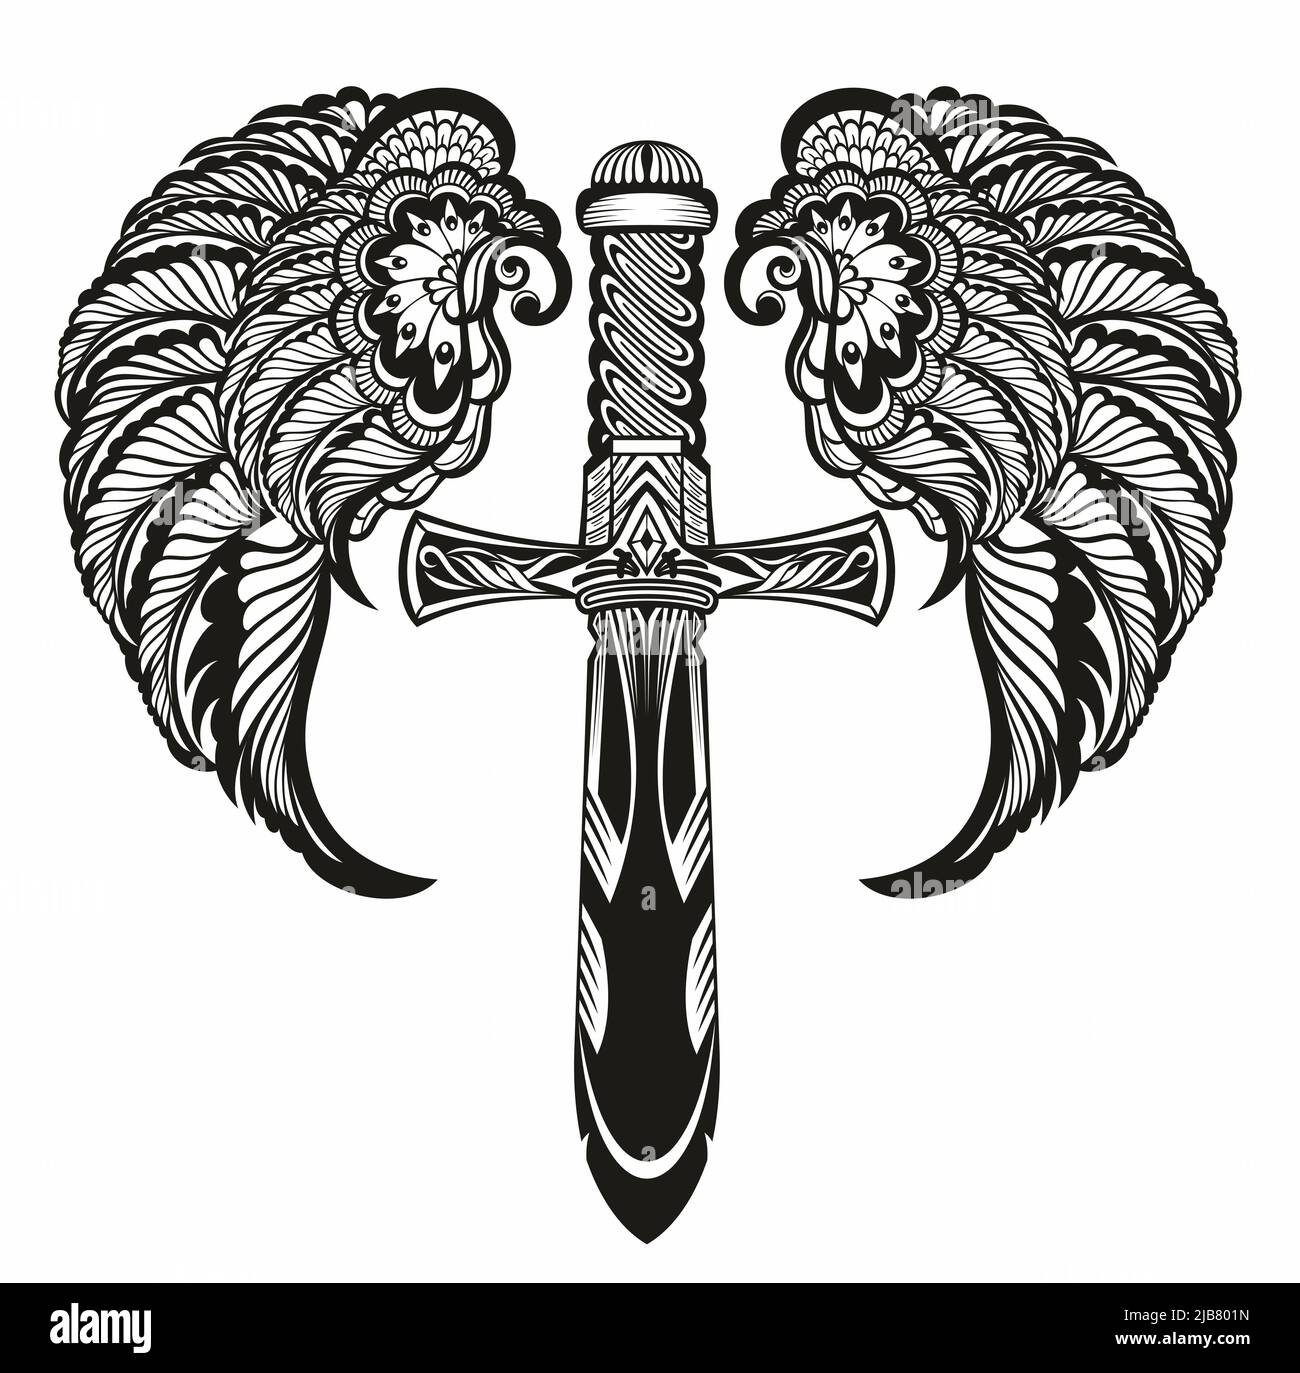 280 Skeleton Wings Tattoo Drawings Illustrations RoyaltyFree Vector  Graphics  Clip Art  iStock